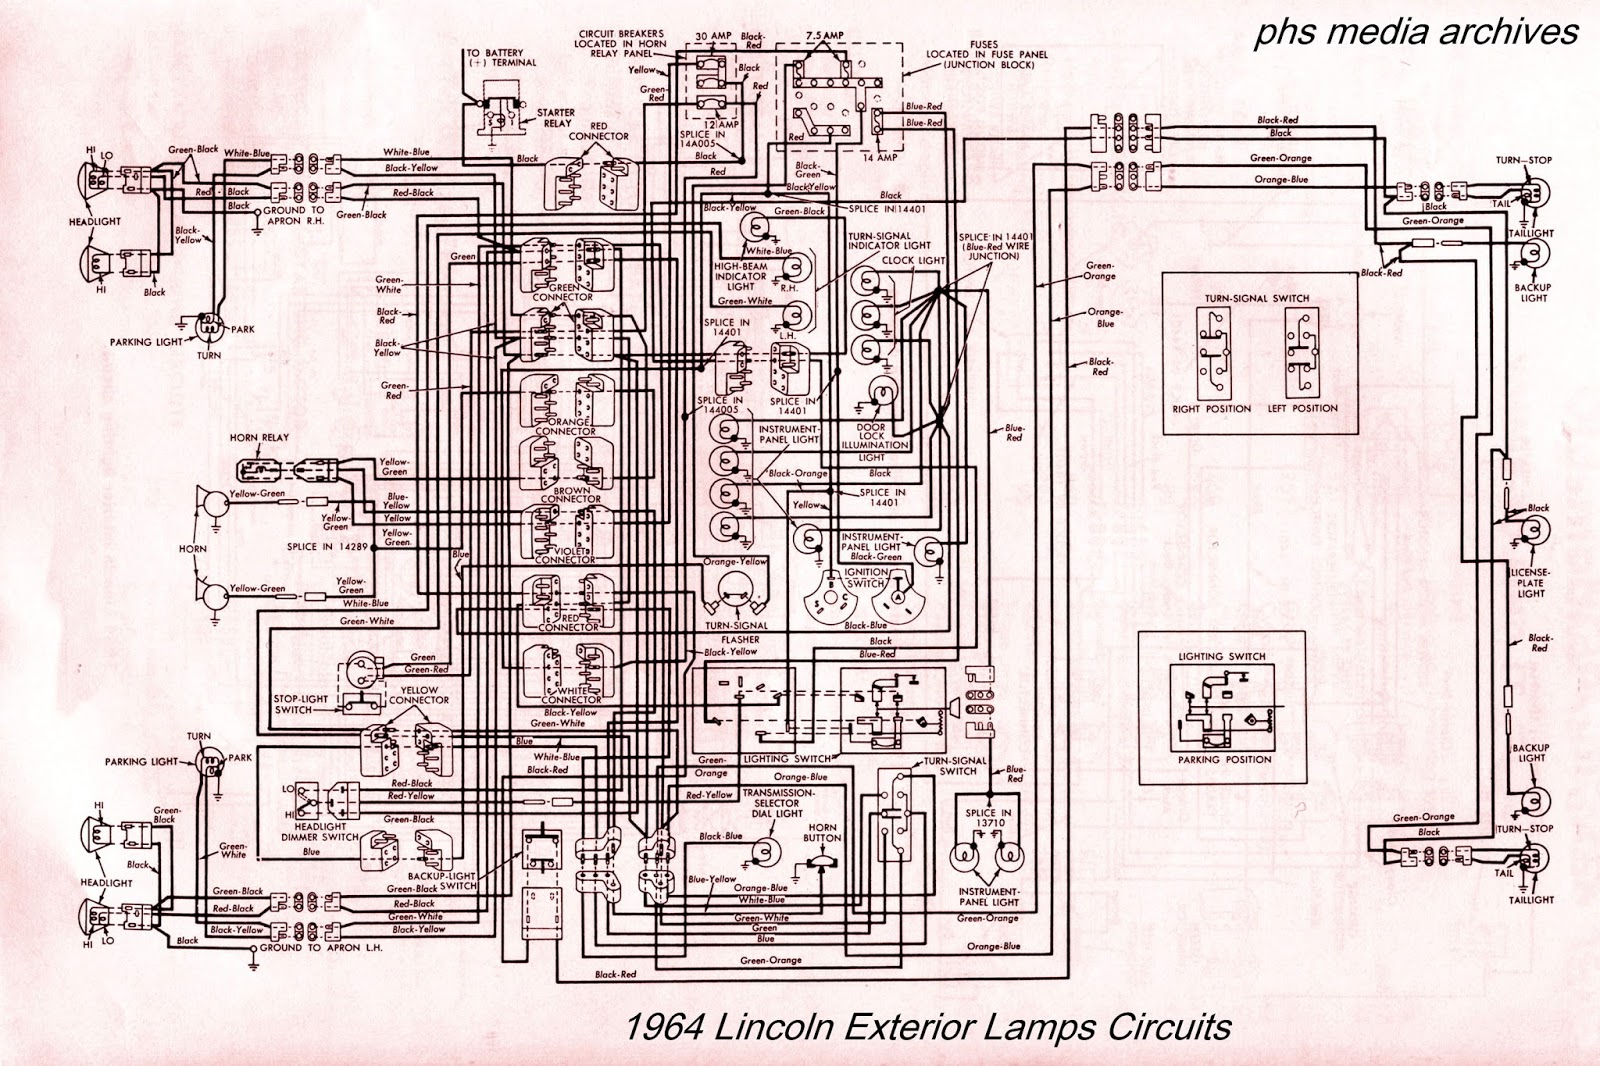 Tech Series: 1960-1964 Lincoln Wiring Diagrams | phscollectorcarworld